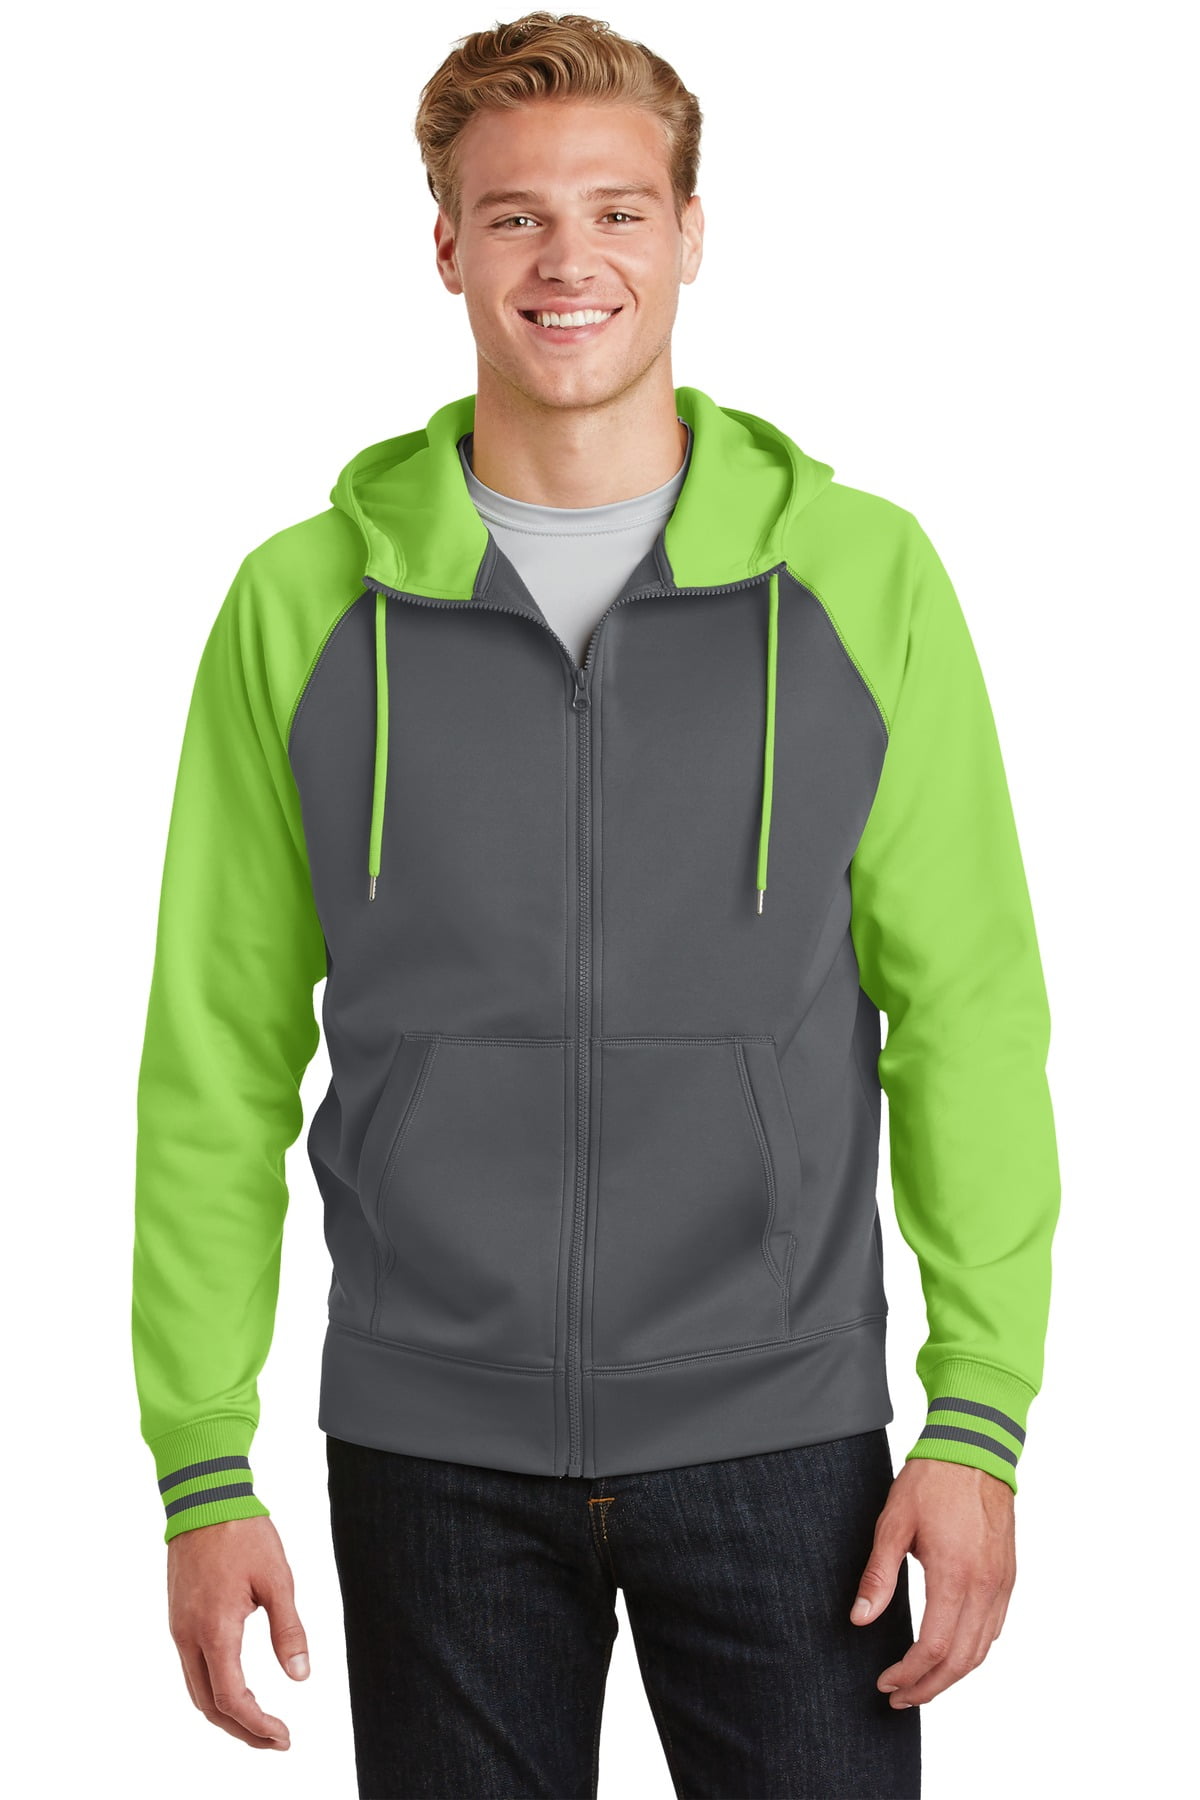 Gary Com Fleece Hoodies for Men Zipper Lightweight Spring Long Sleeve Active Mens Jackets Sports Full Zip Sweatshirts 